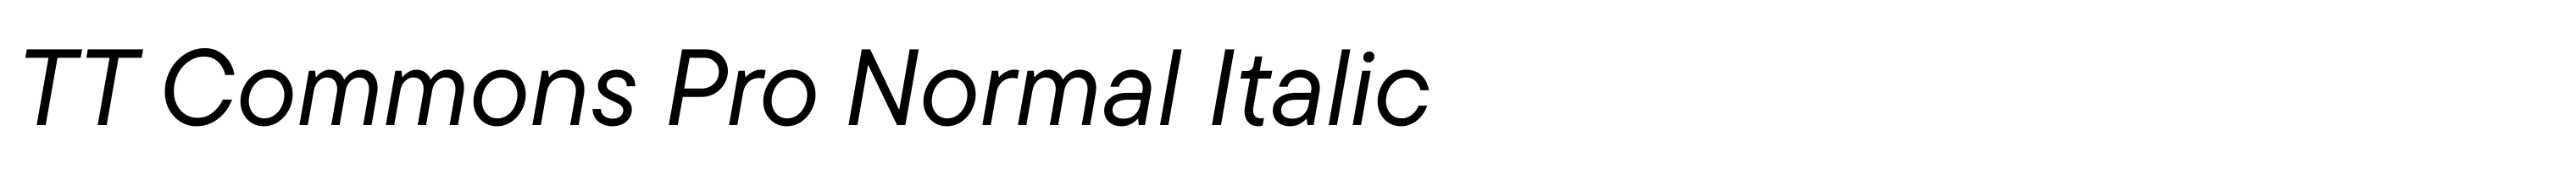 TT Commons Pro Normal Italic